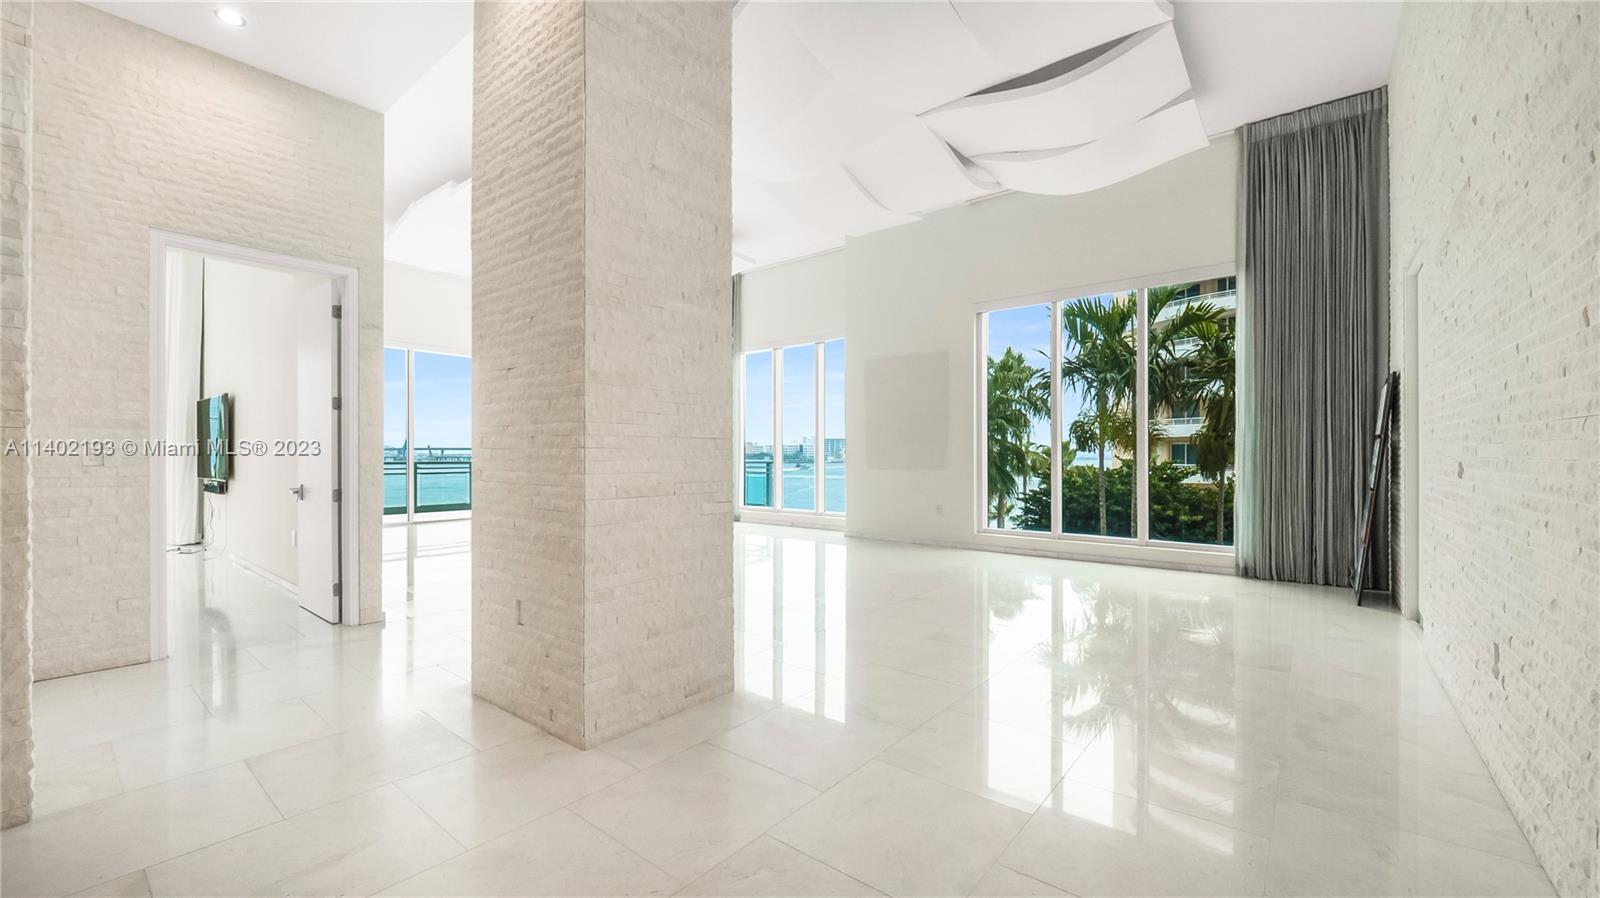 Property for Sale at 900 Brickell Key Blvd 403, Miami, Broward County, Florida - Bedrooms: 2 
Bathrooms: 3  - $2,499,000